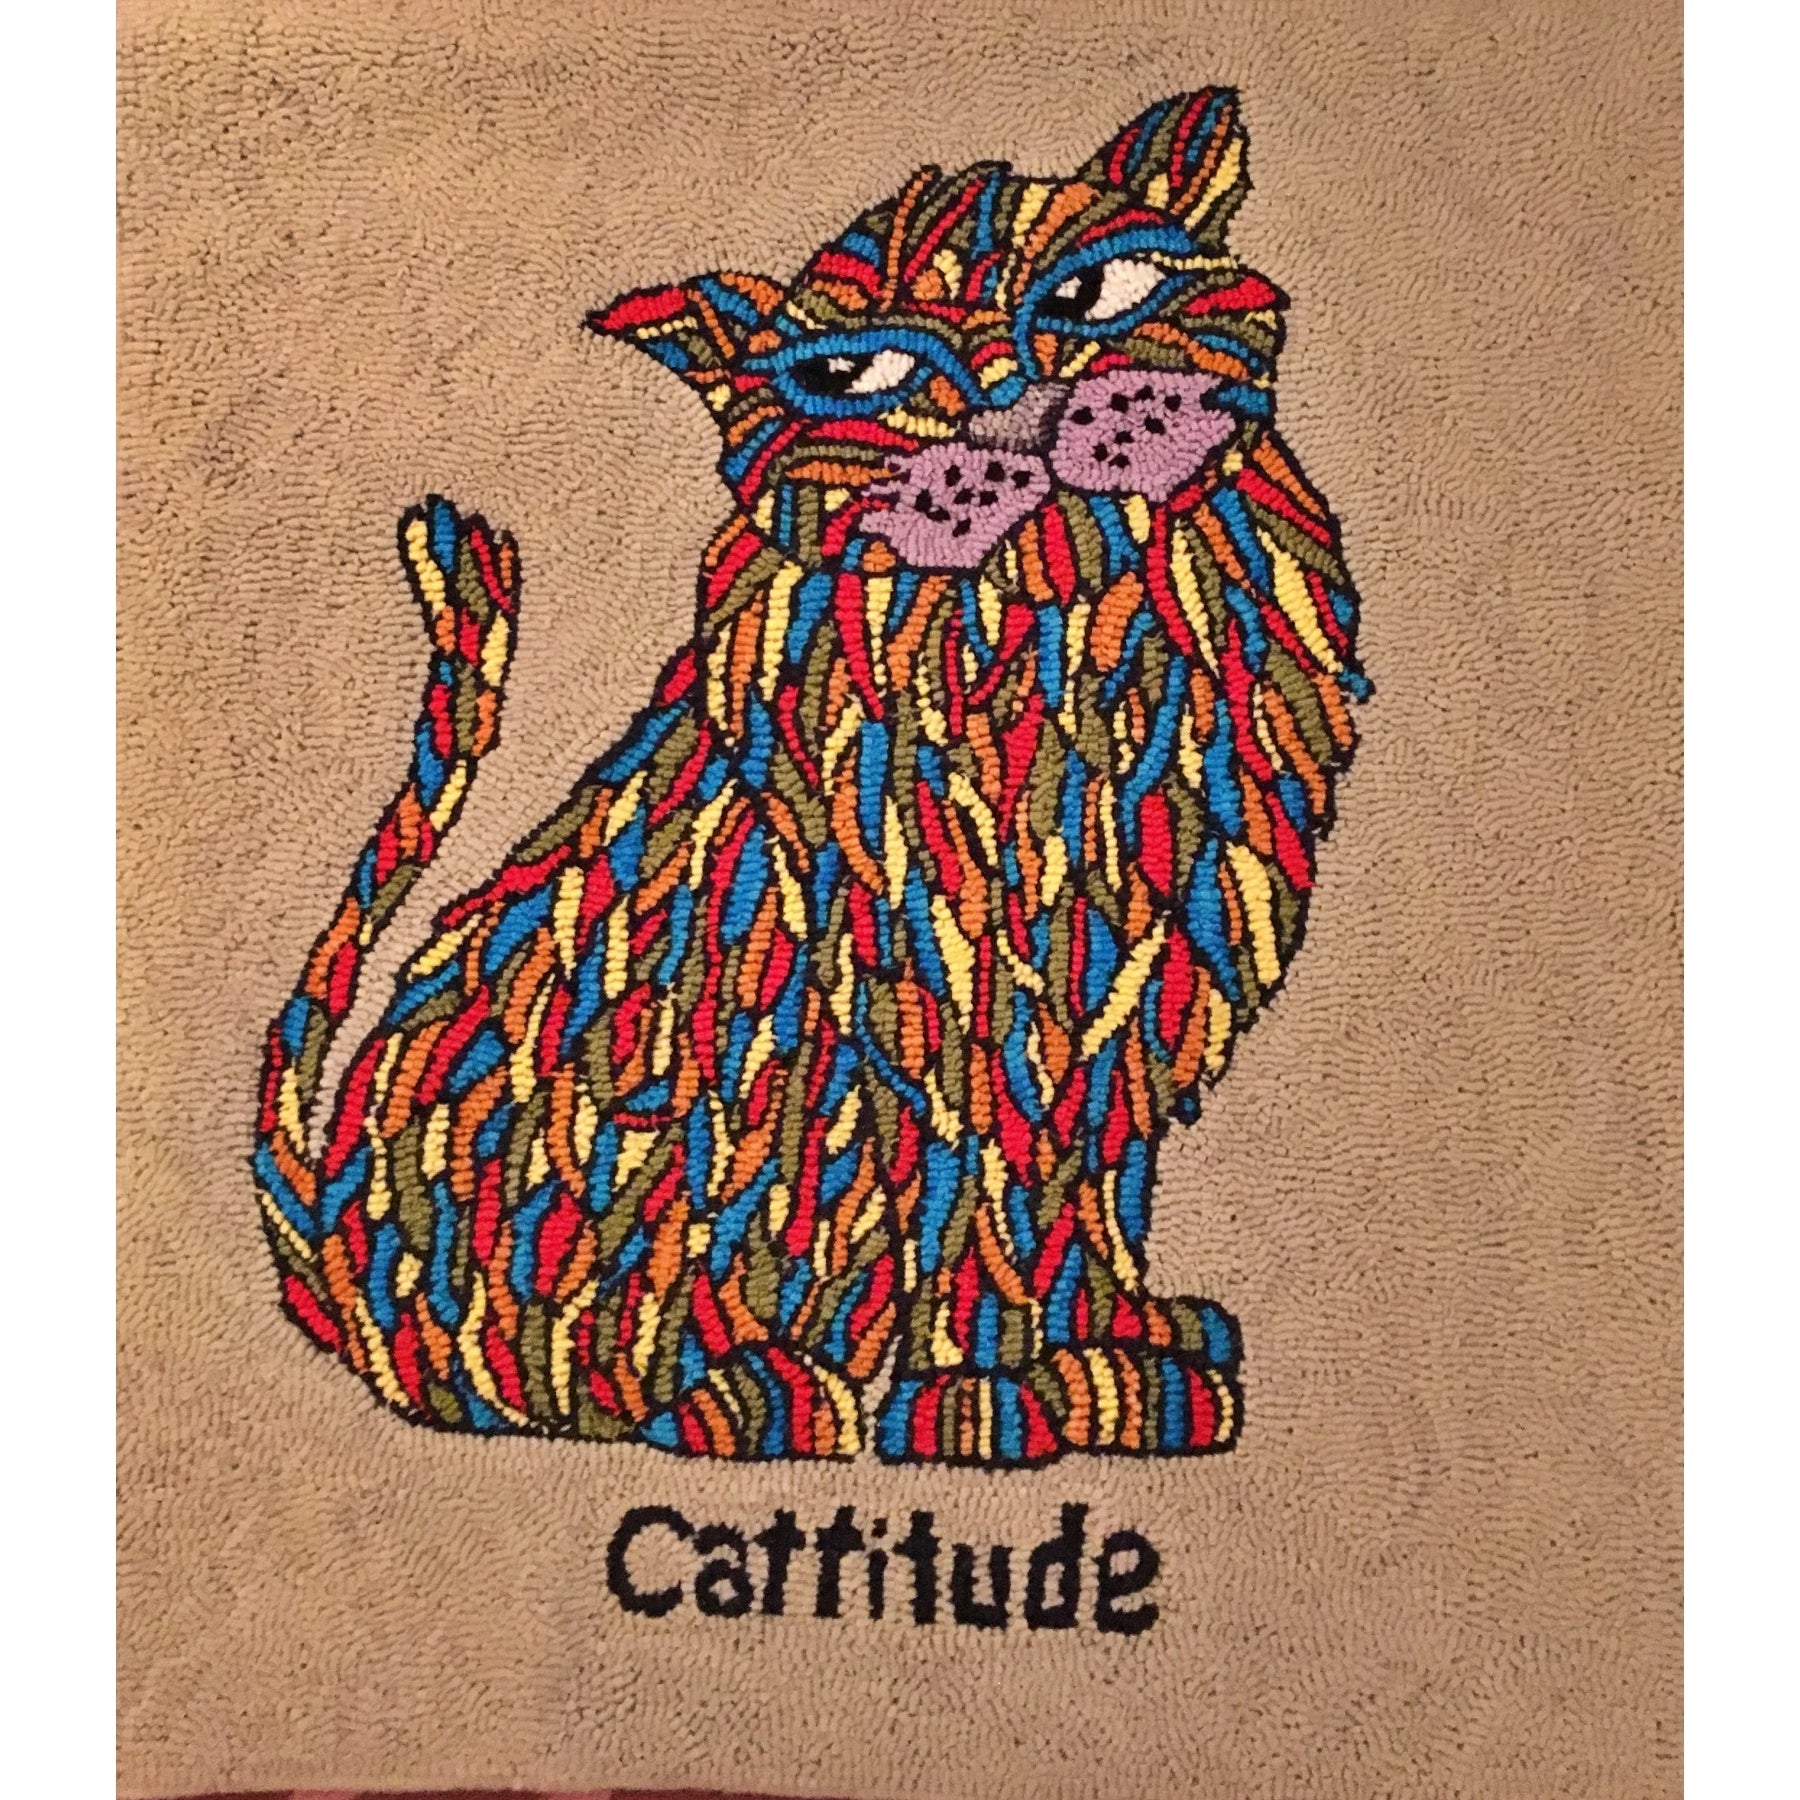 Cattitude, rug hooked by Jayne Nevins